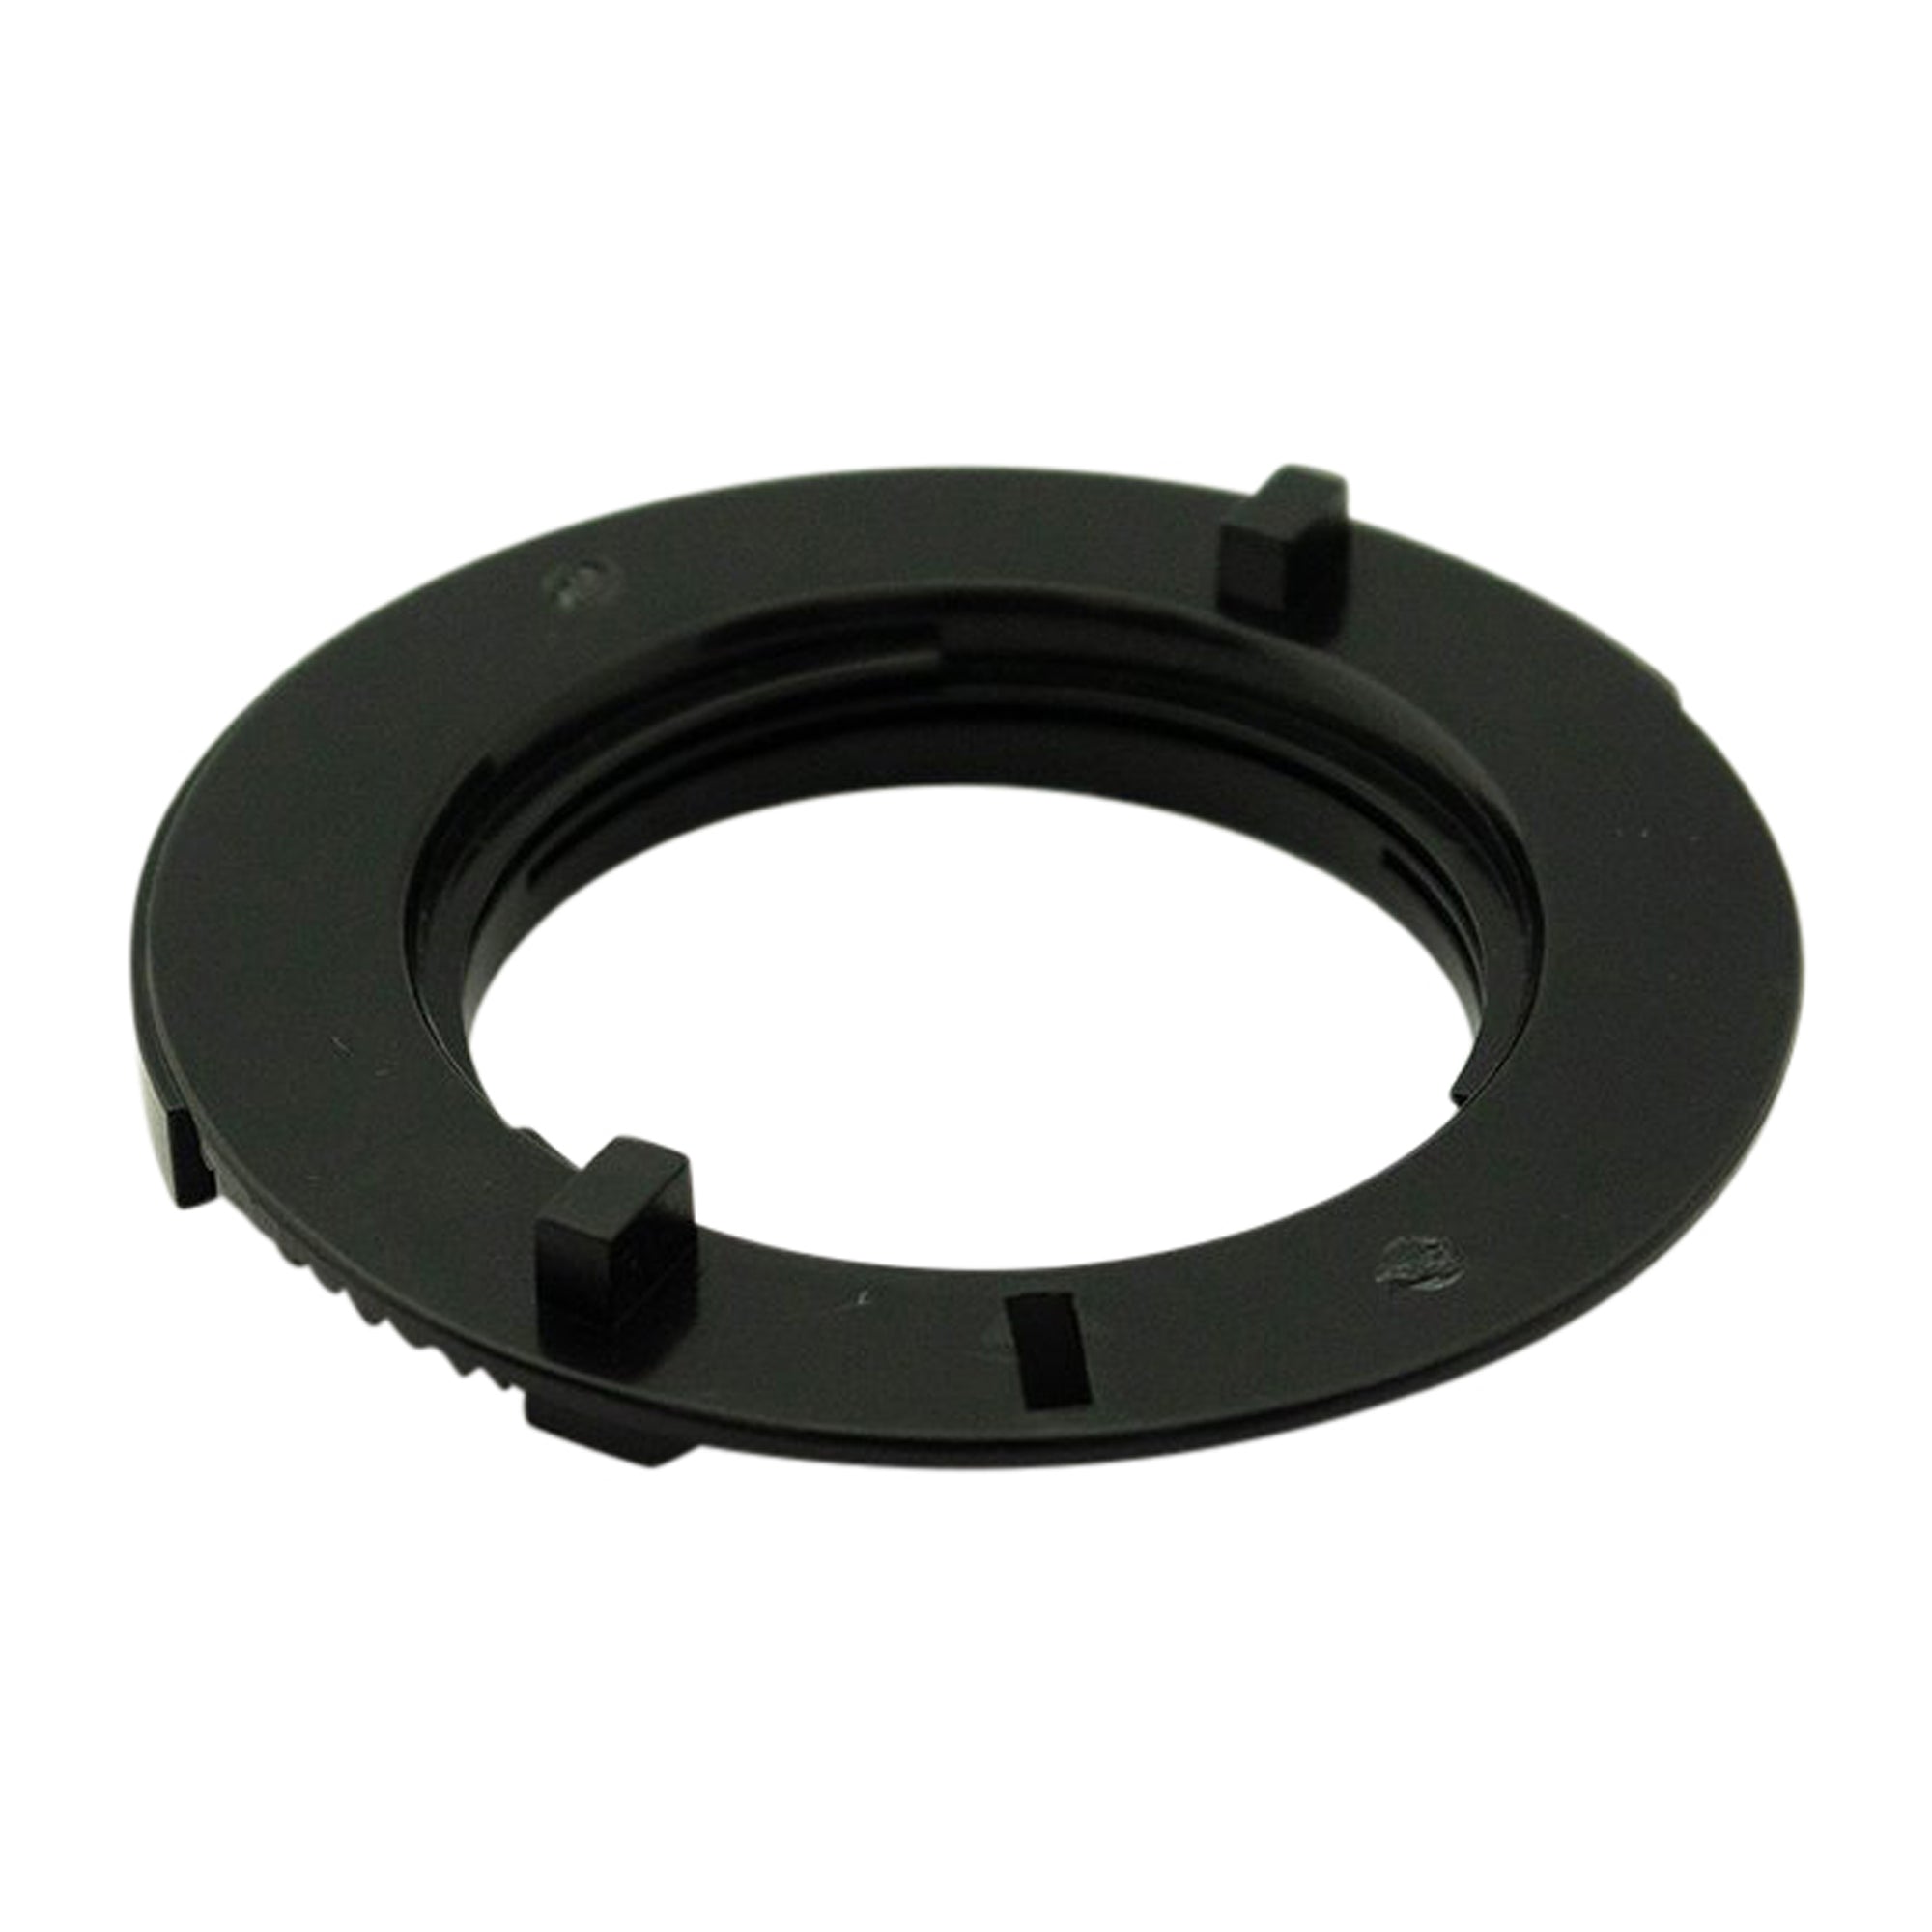 Adjustment Ring - Espresso Gear